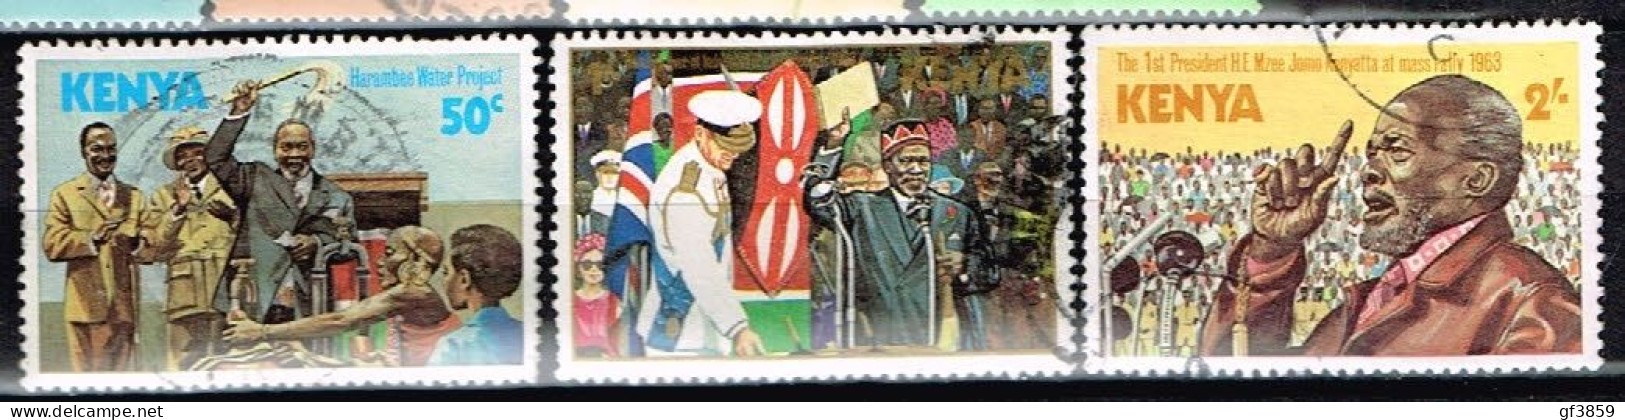 KENYA / Oblitérés/Used / 1978 - Hommage Au Premier Président - Kenya (1963-...)